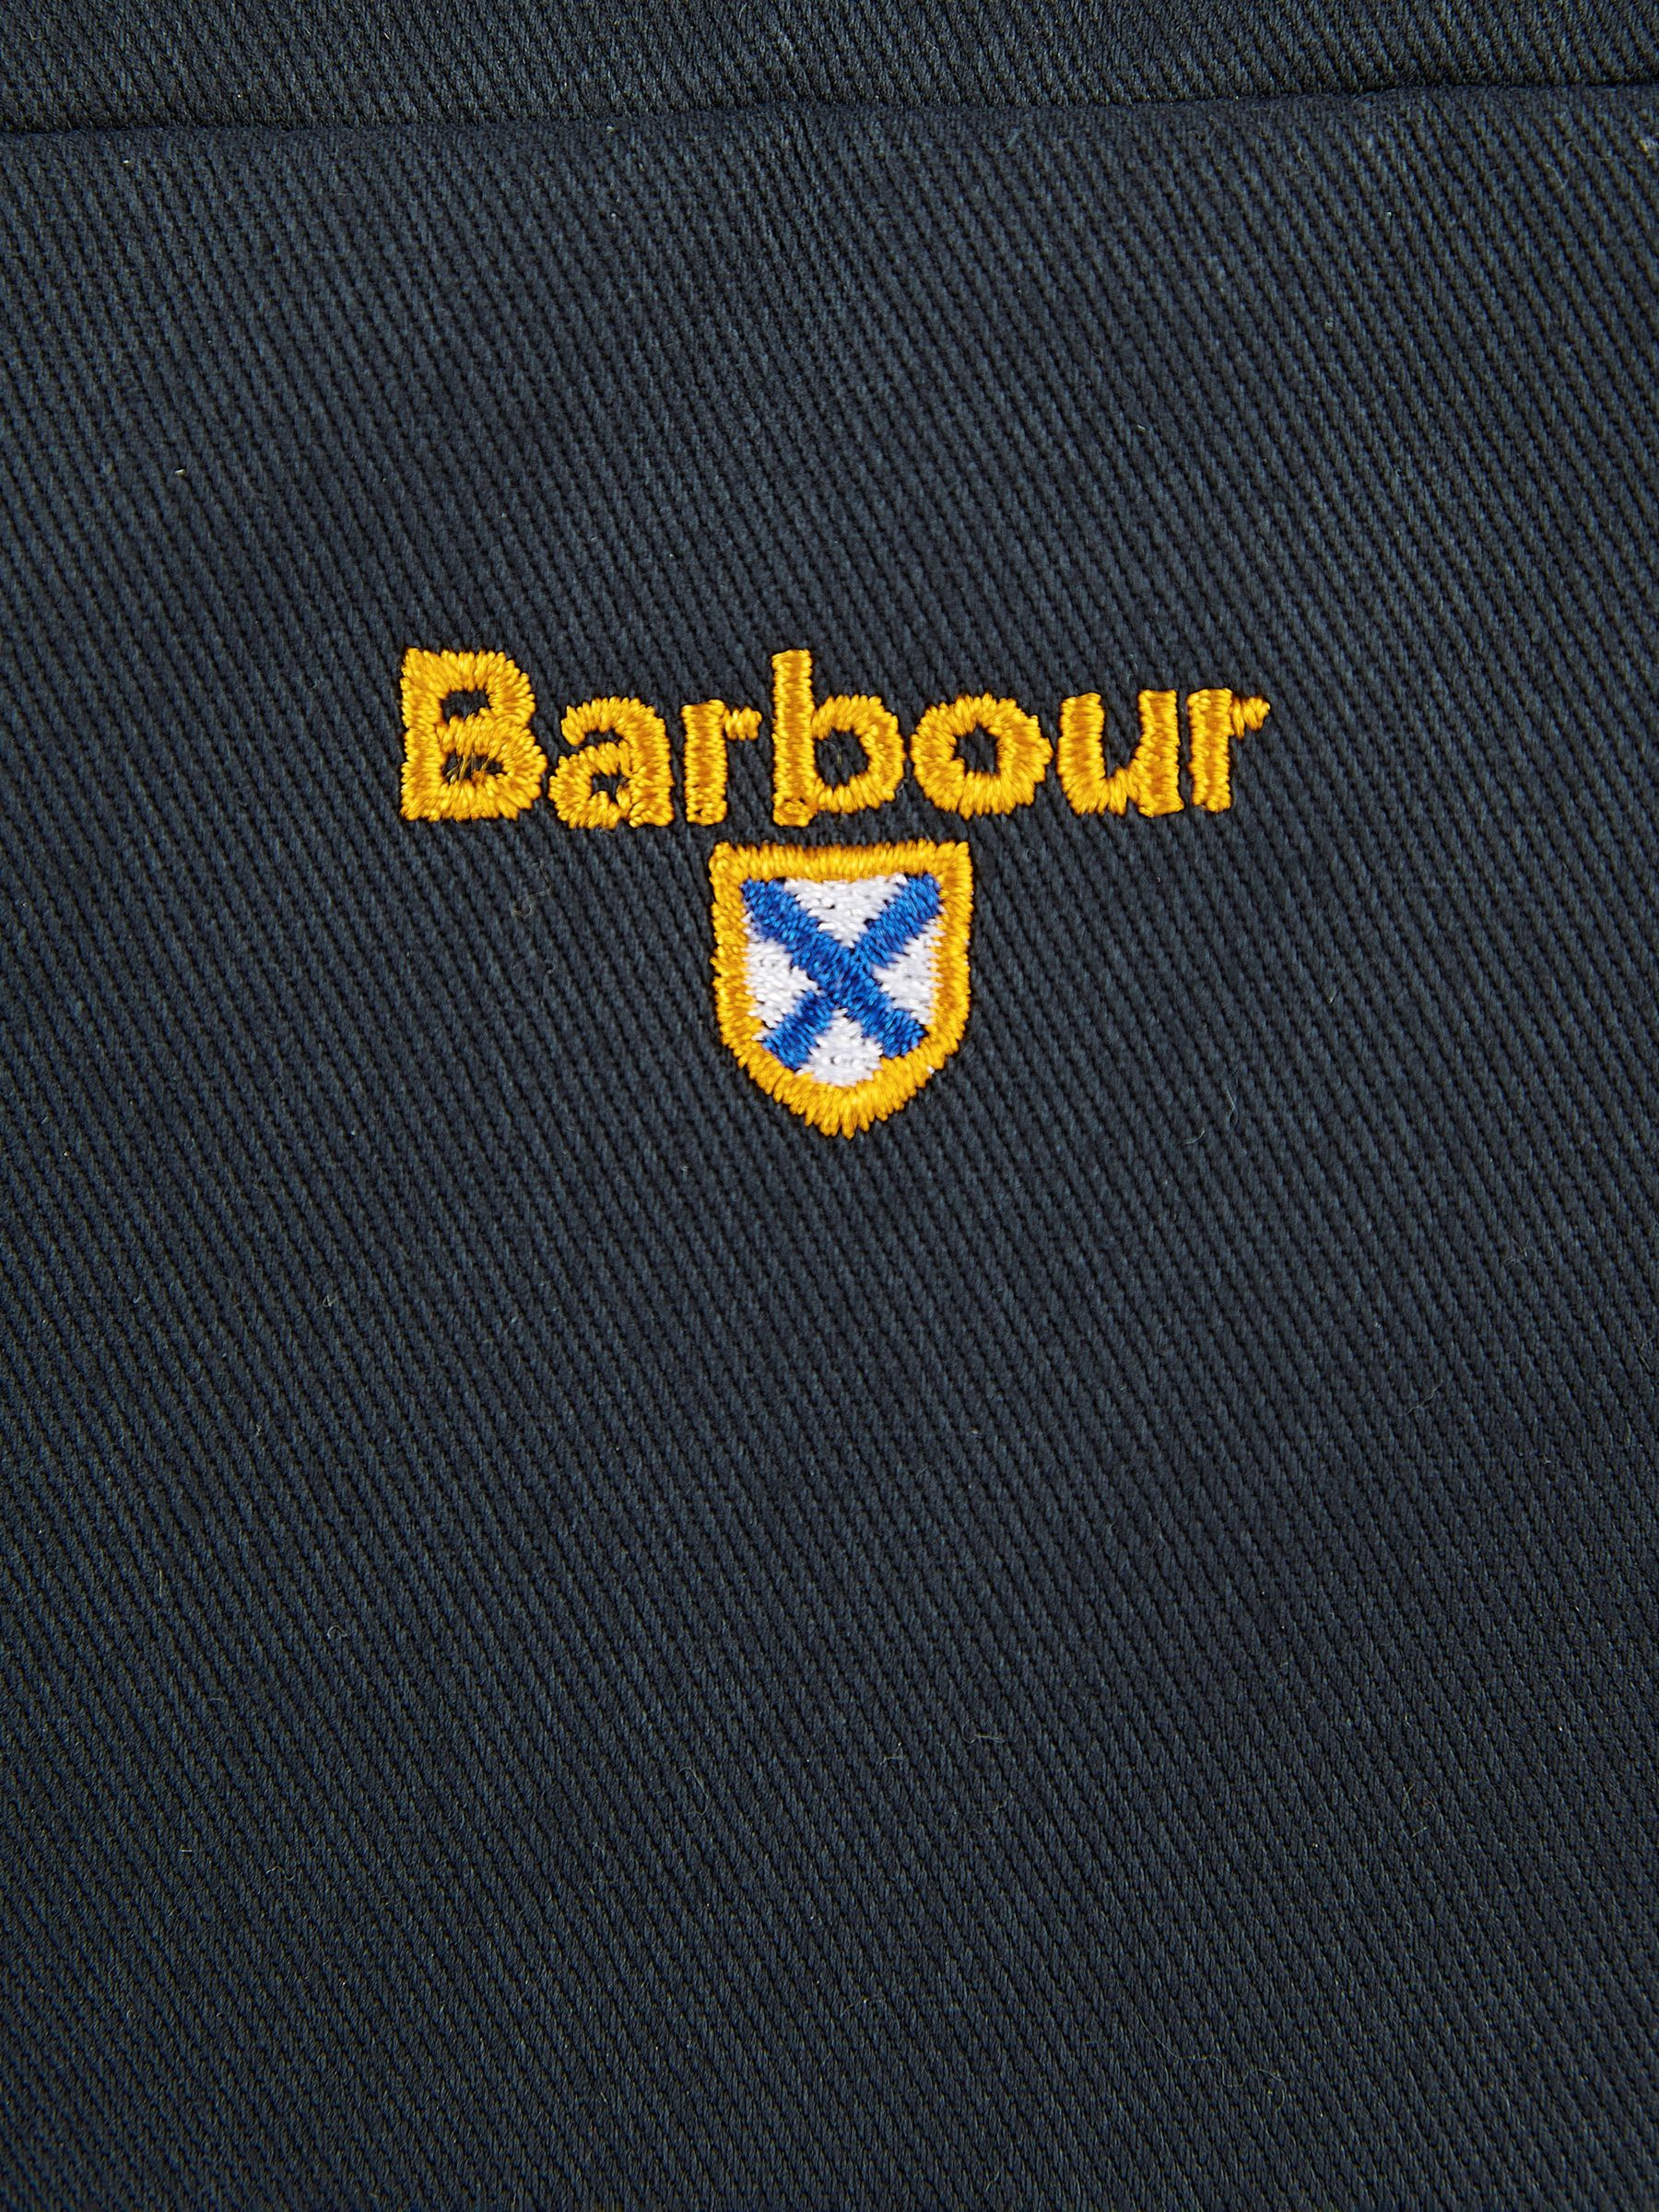 Buy Barbour Cascade Crossbody Bag, Navy Online at johnlewis.com